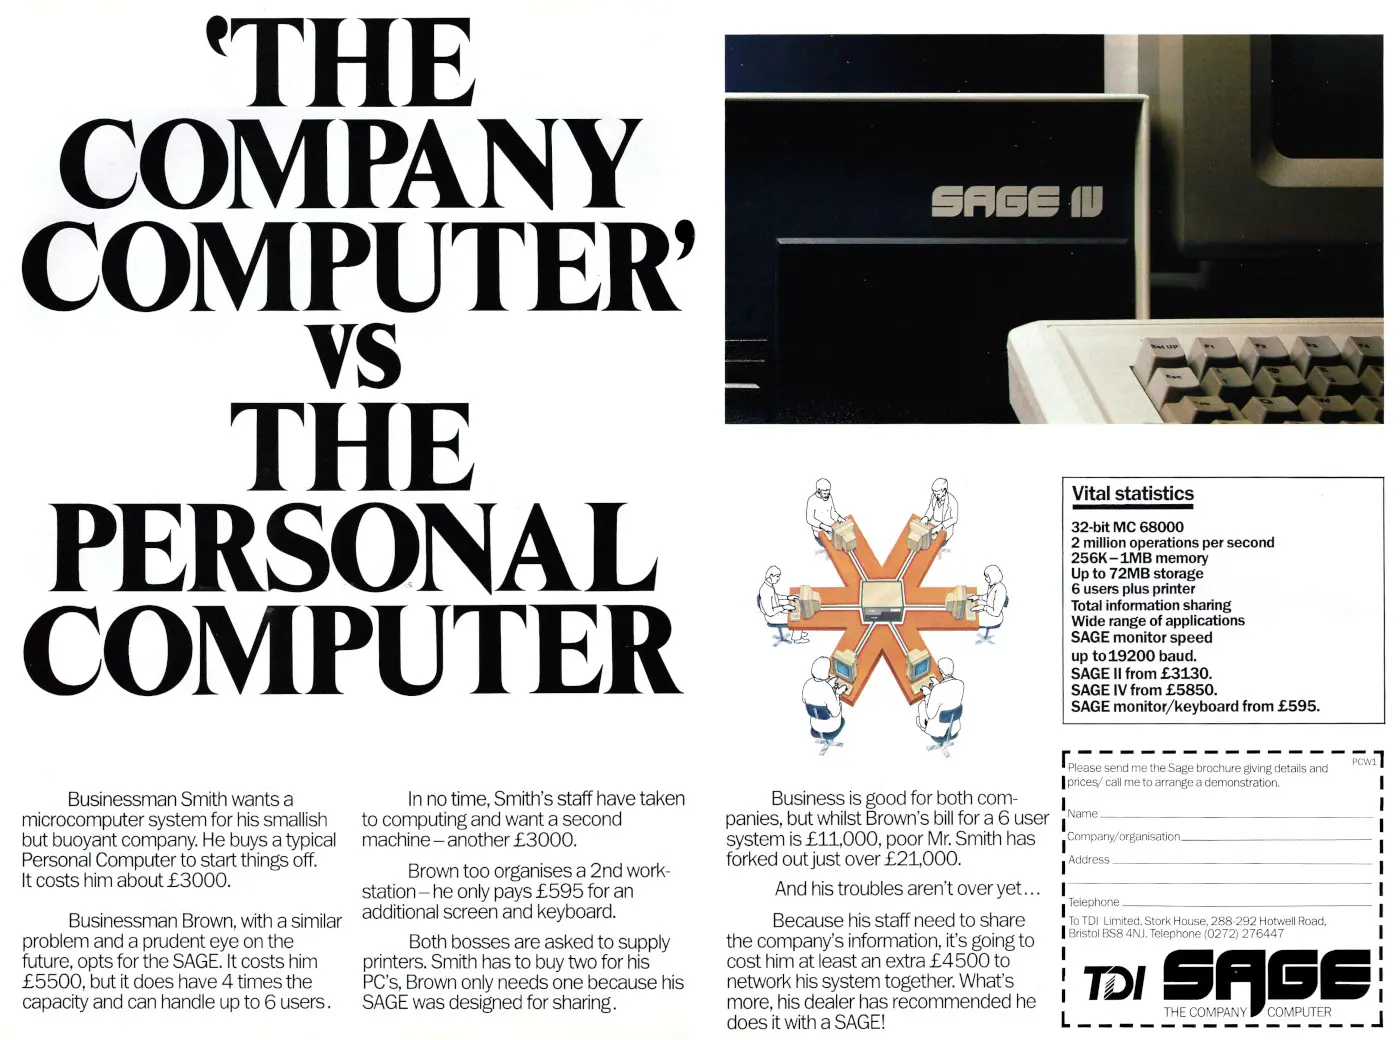 TDI/Sage Advert: The Company Computer vs. the Personal Computer, from Personal Computer World, March 1984